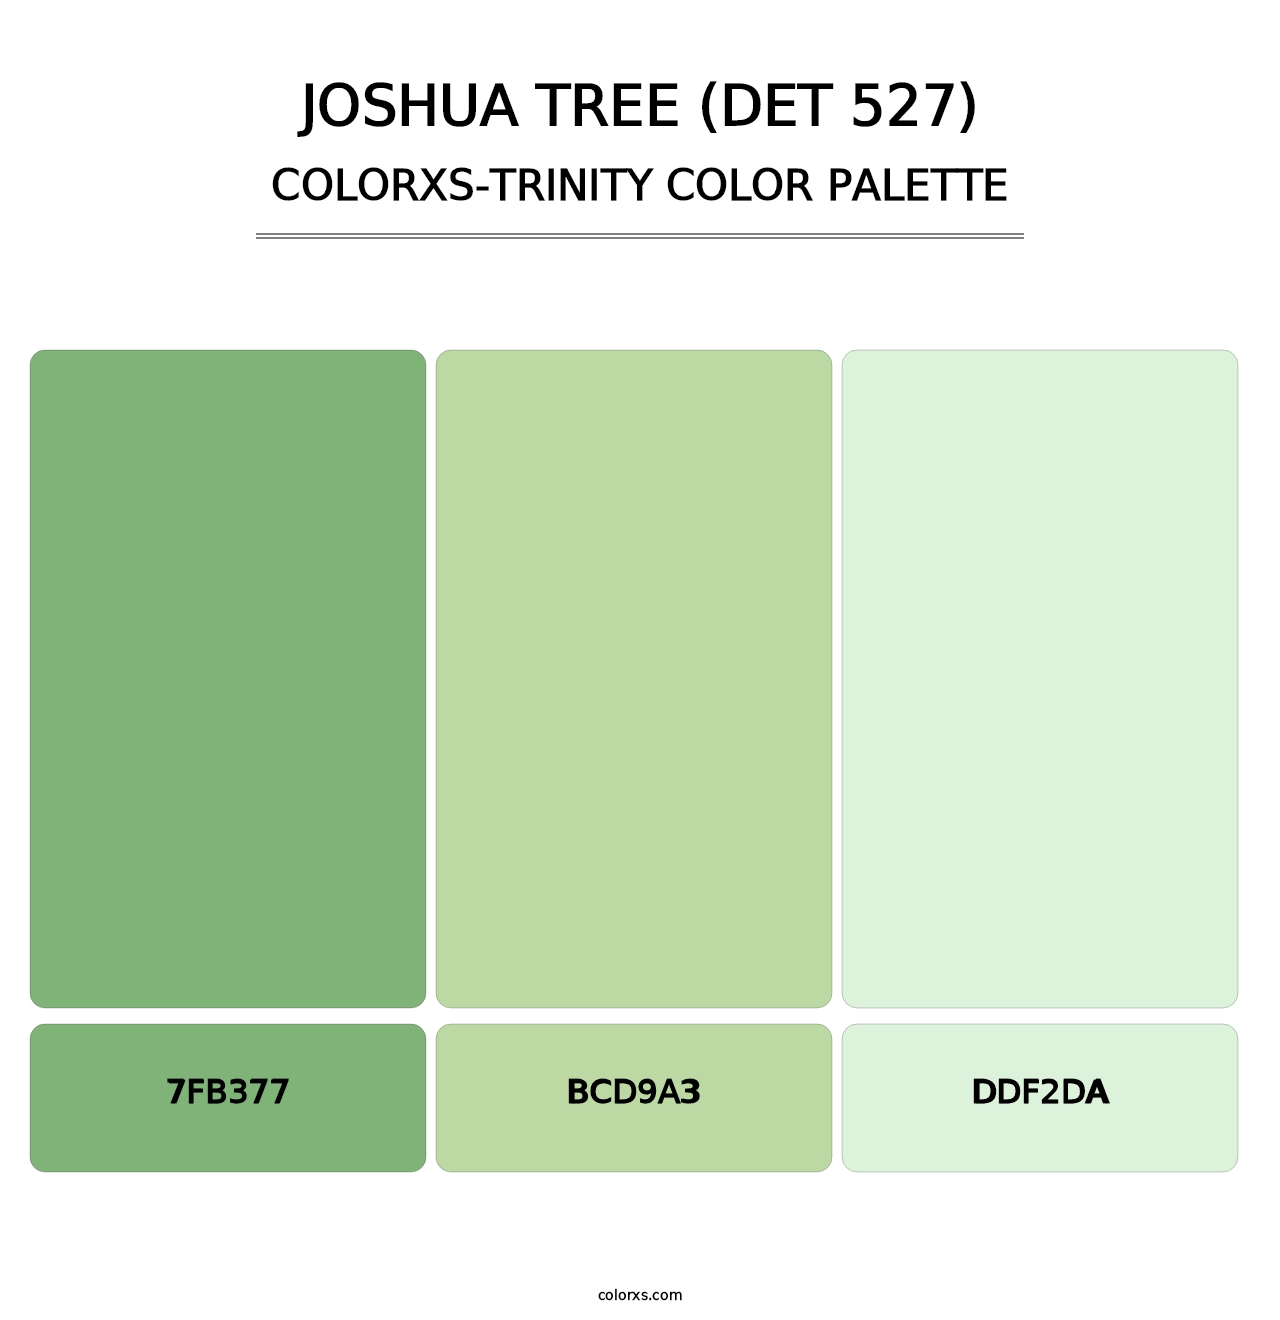 Joshua Tree (DET 527) - Colorxs Trinity Palette